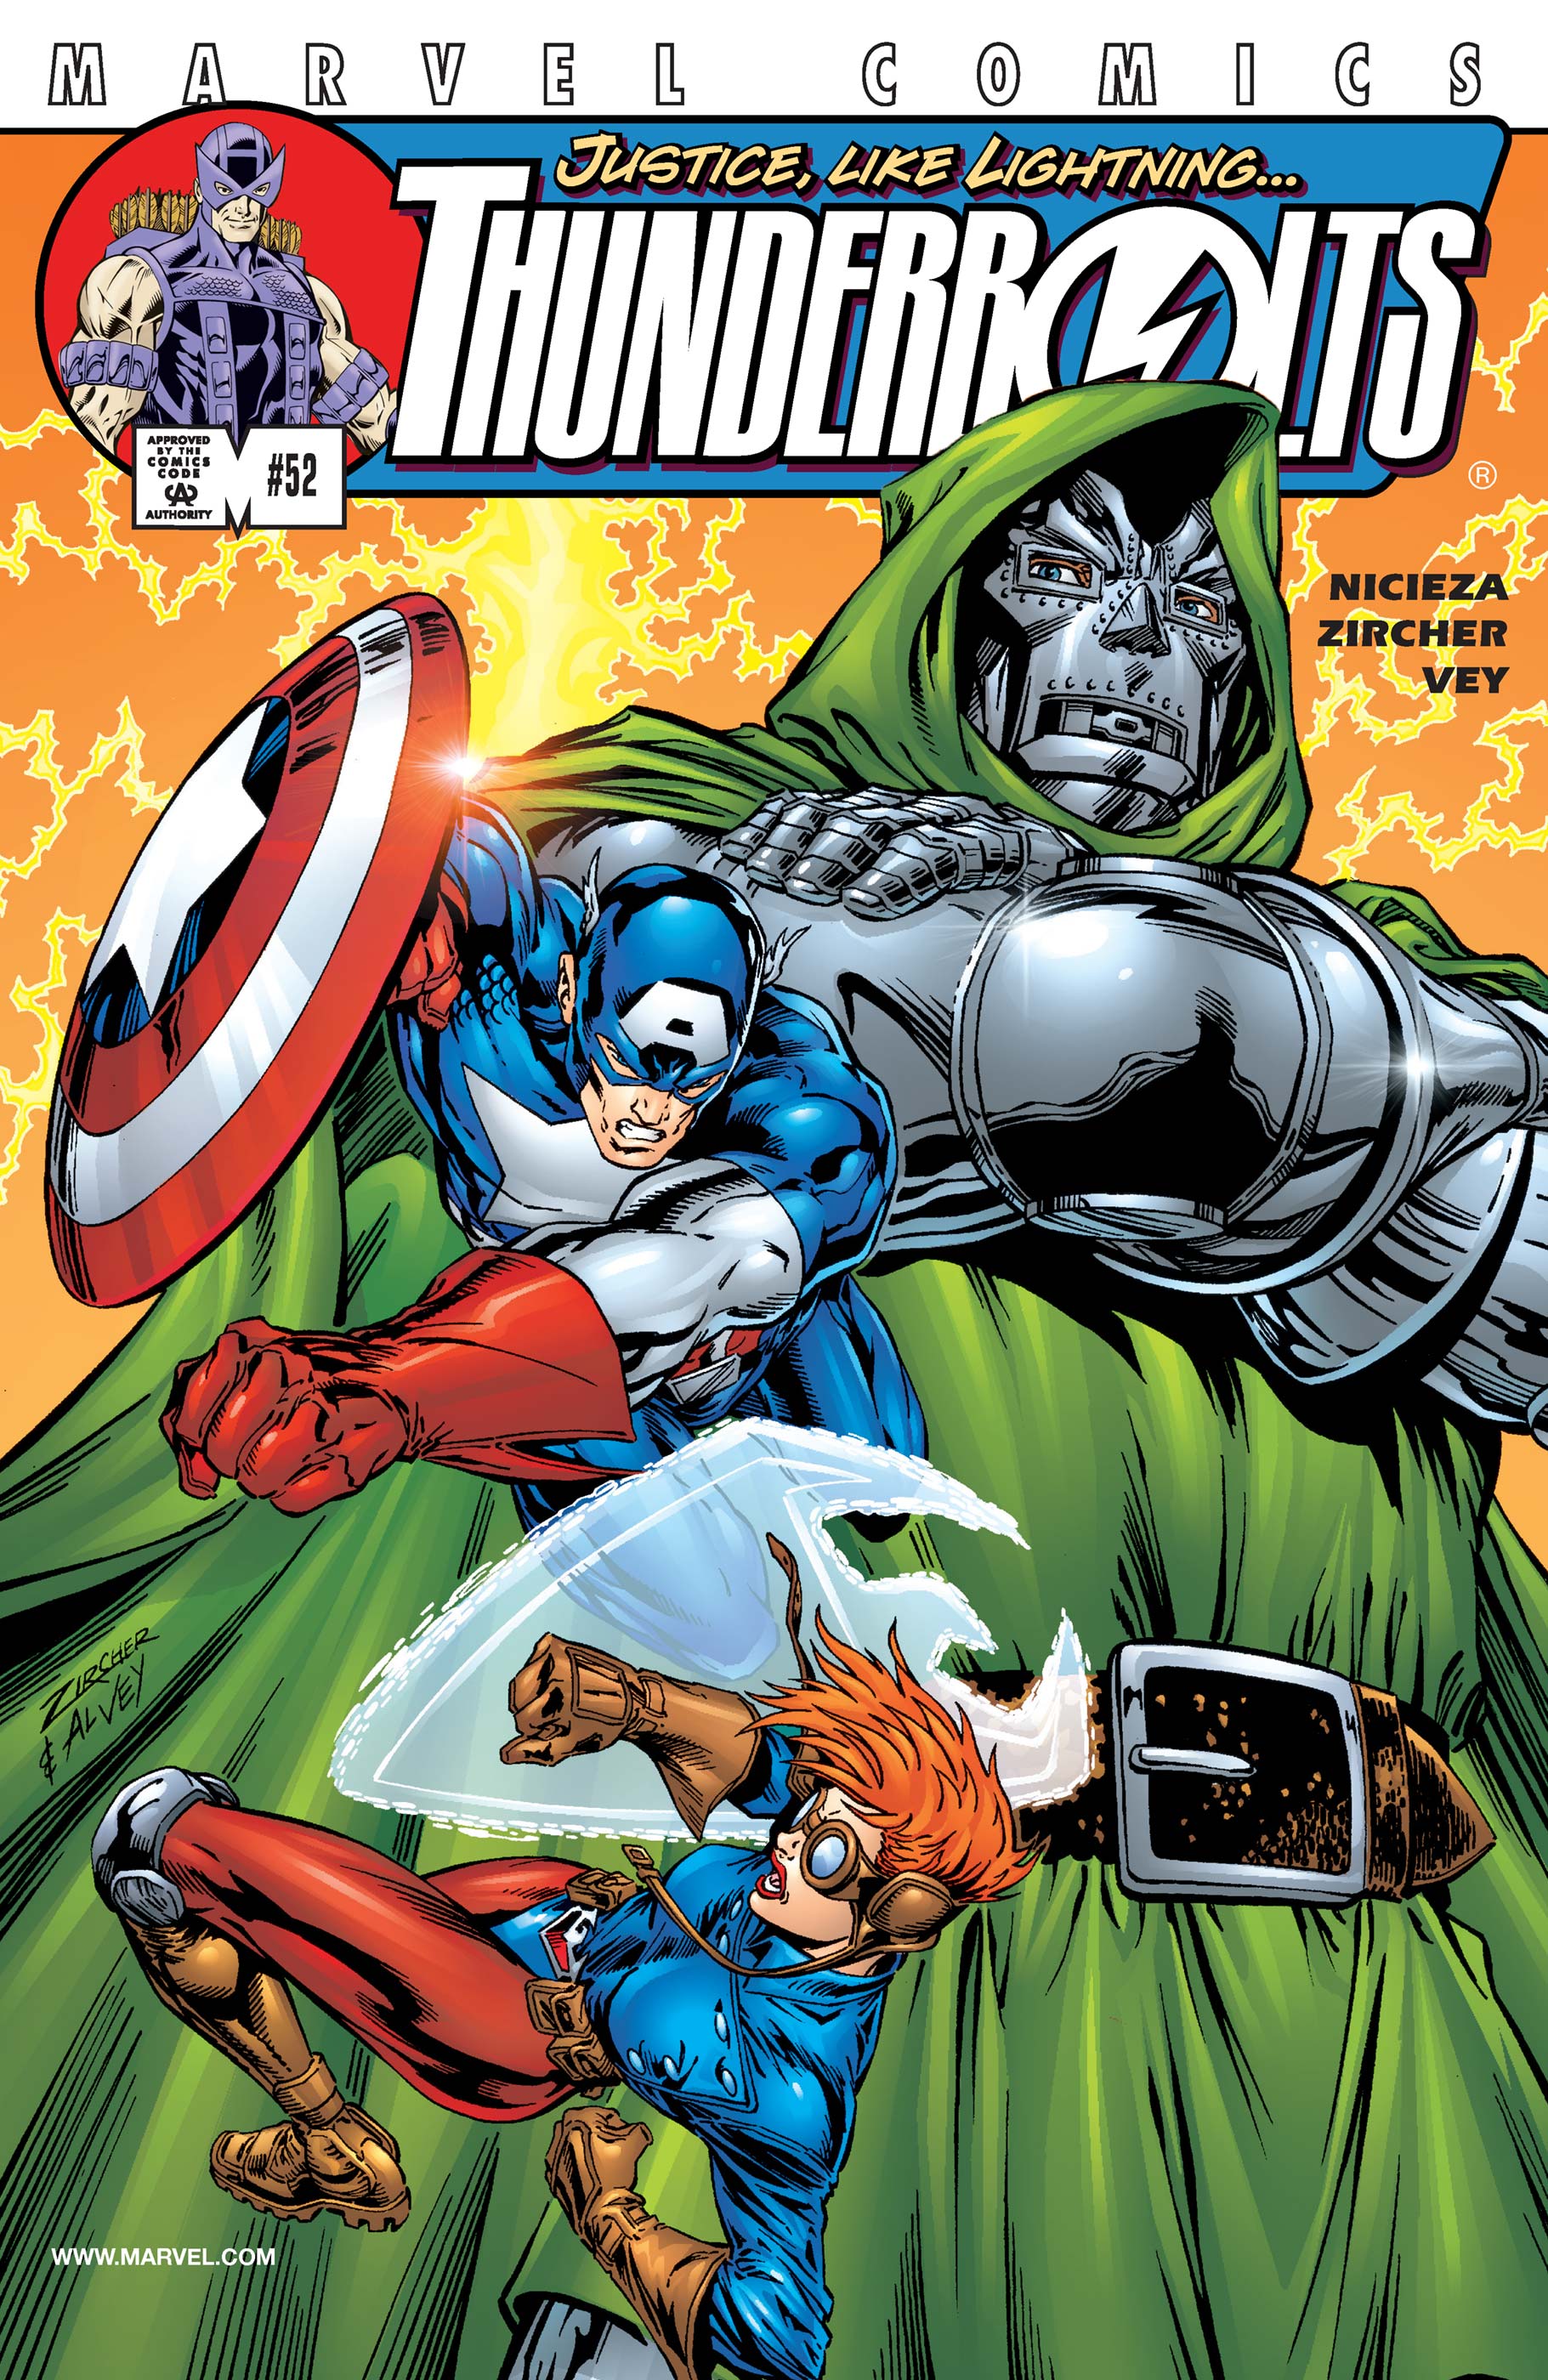 Thunderbolts (1997) #52